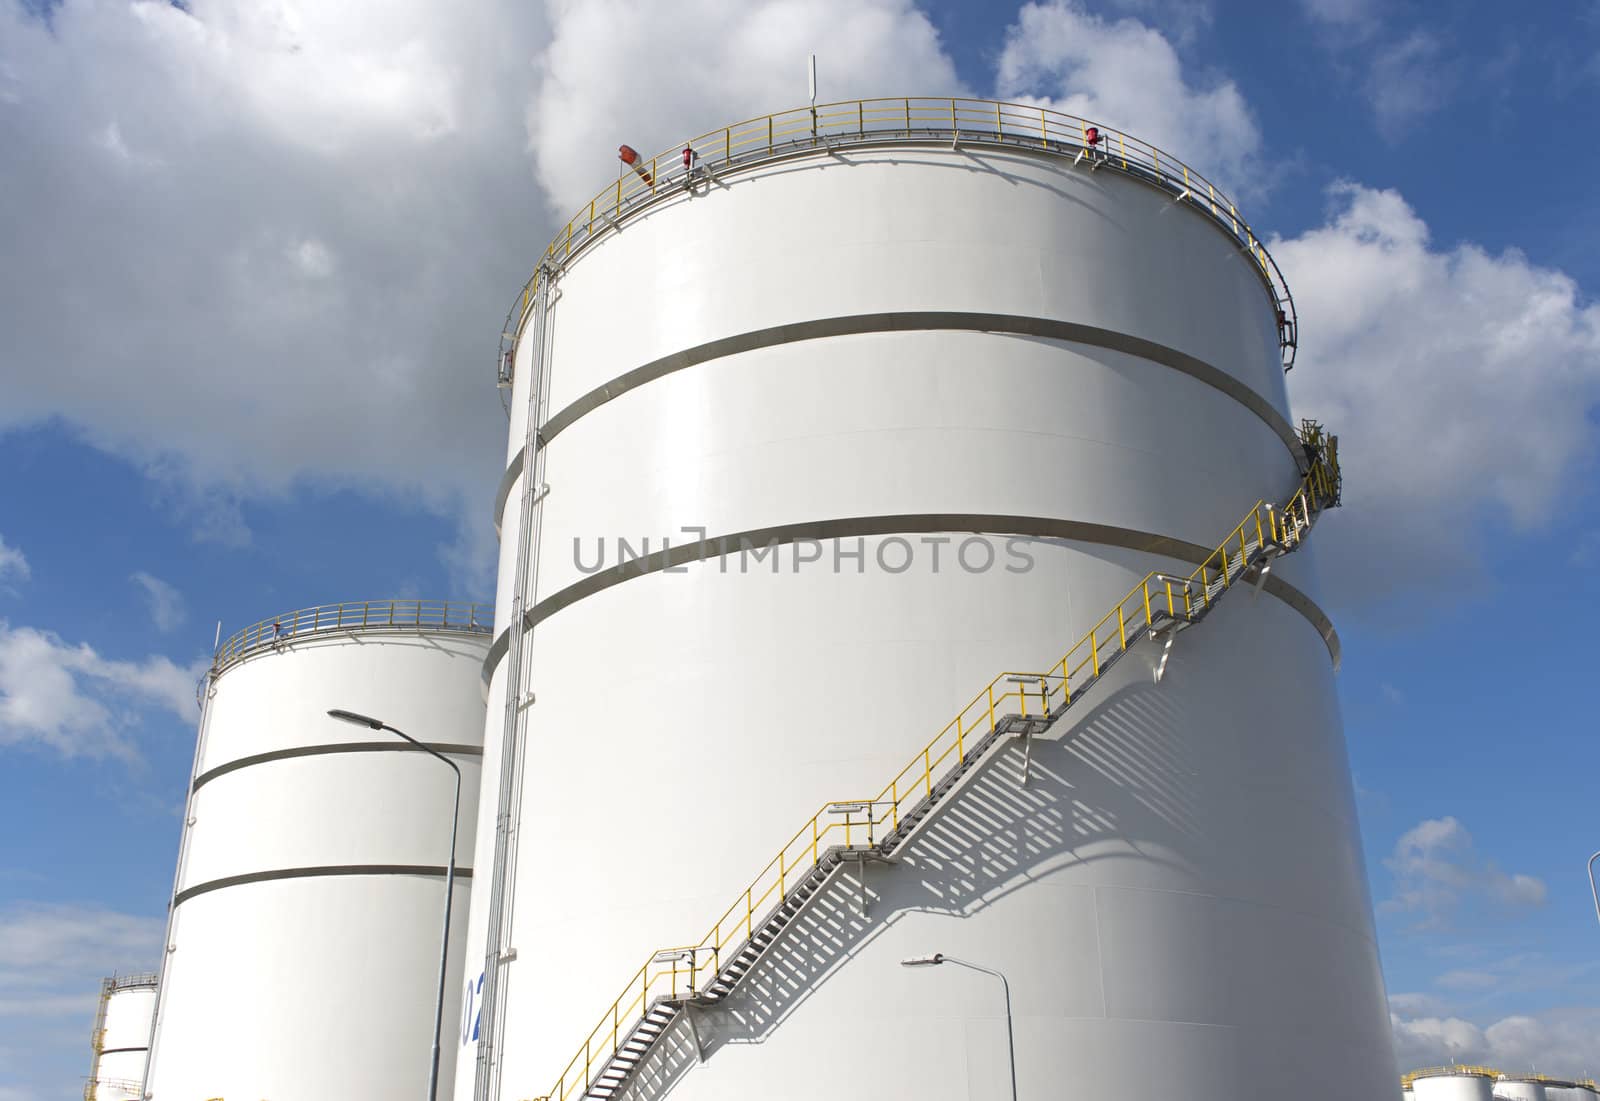 oil storage tanks by compuinfoto